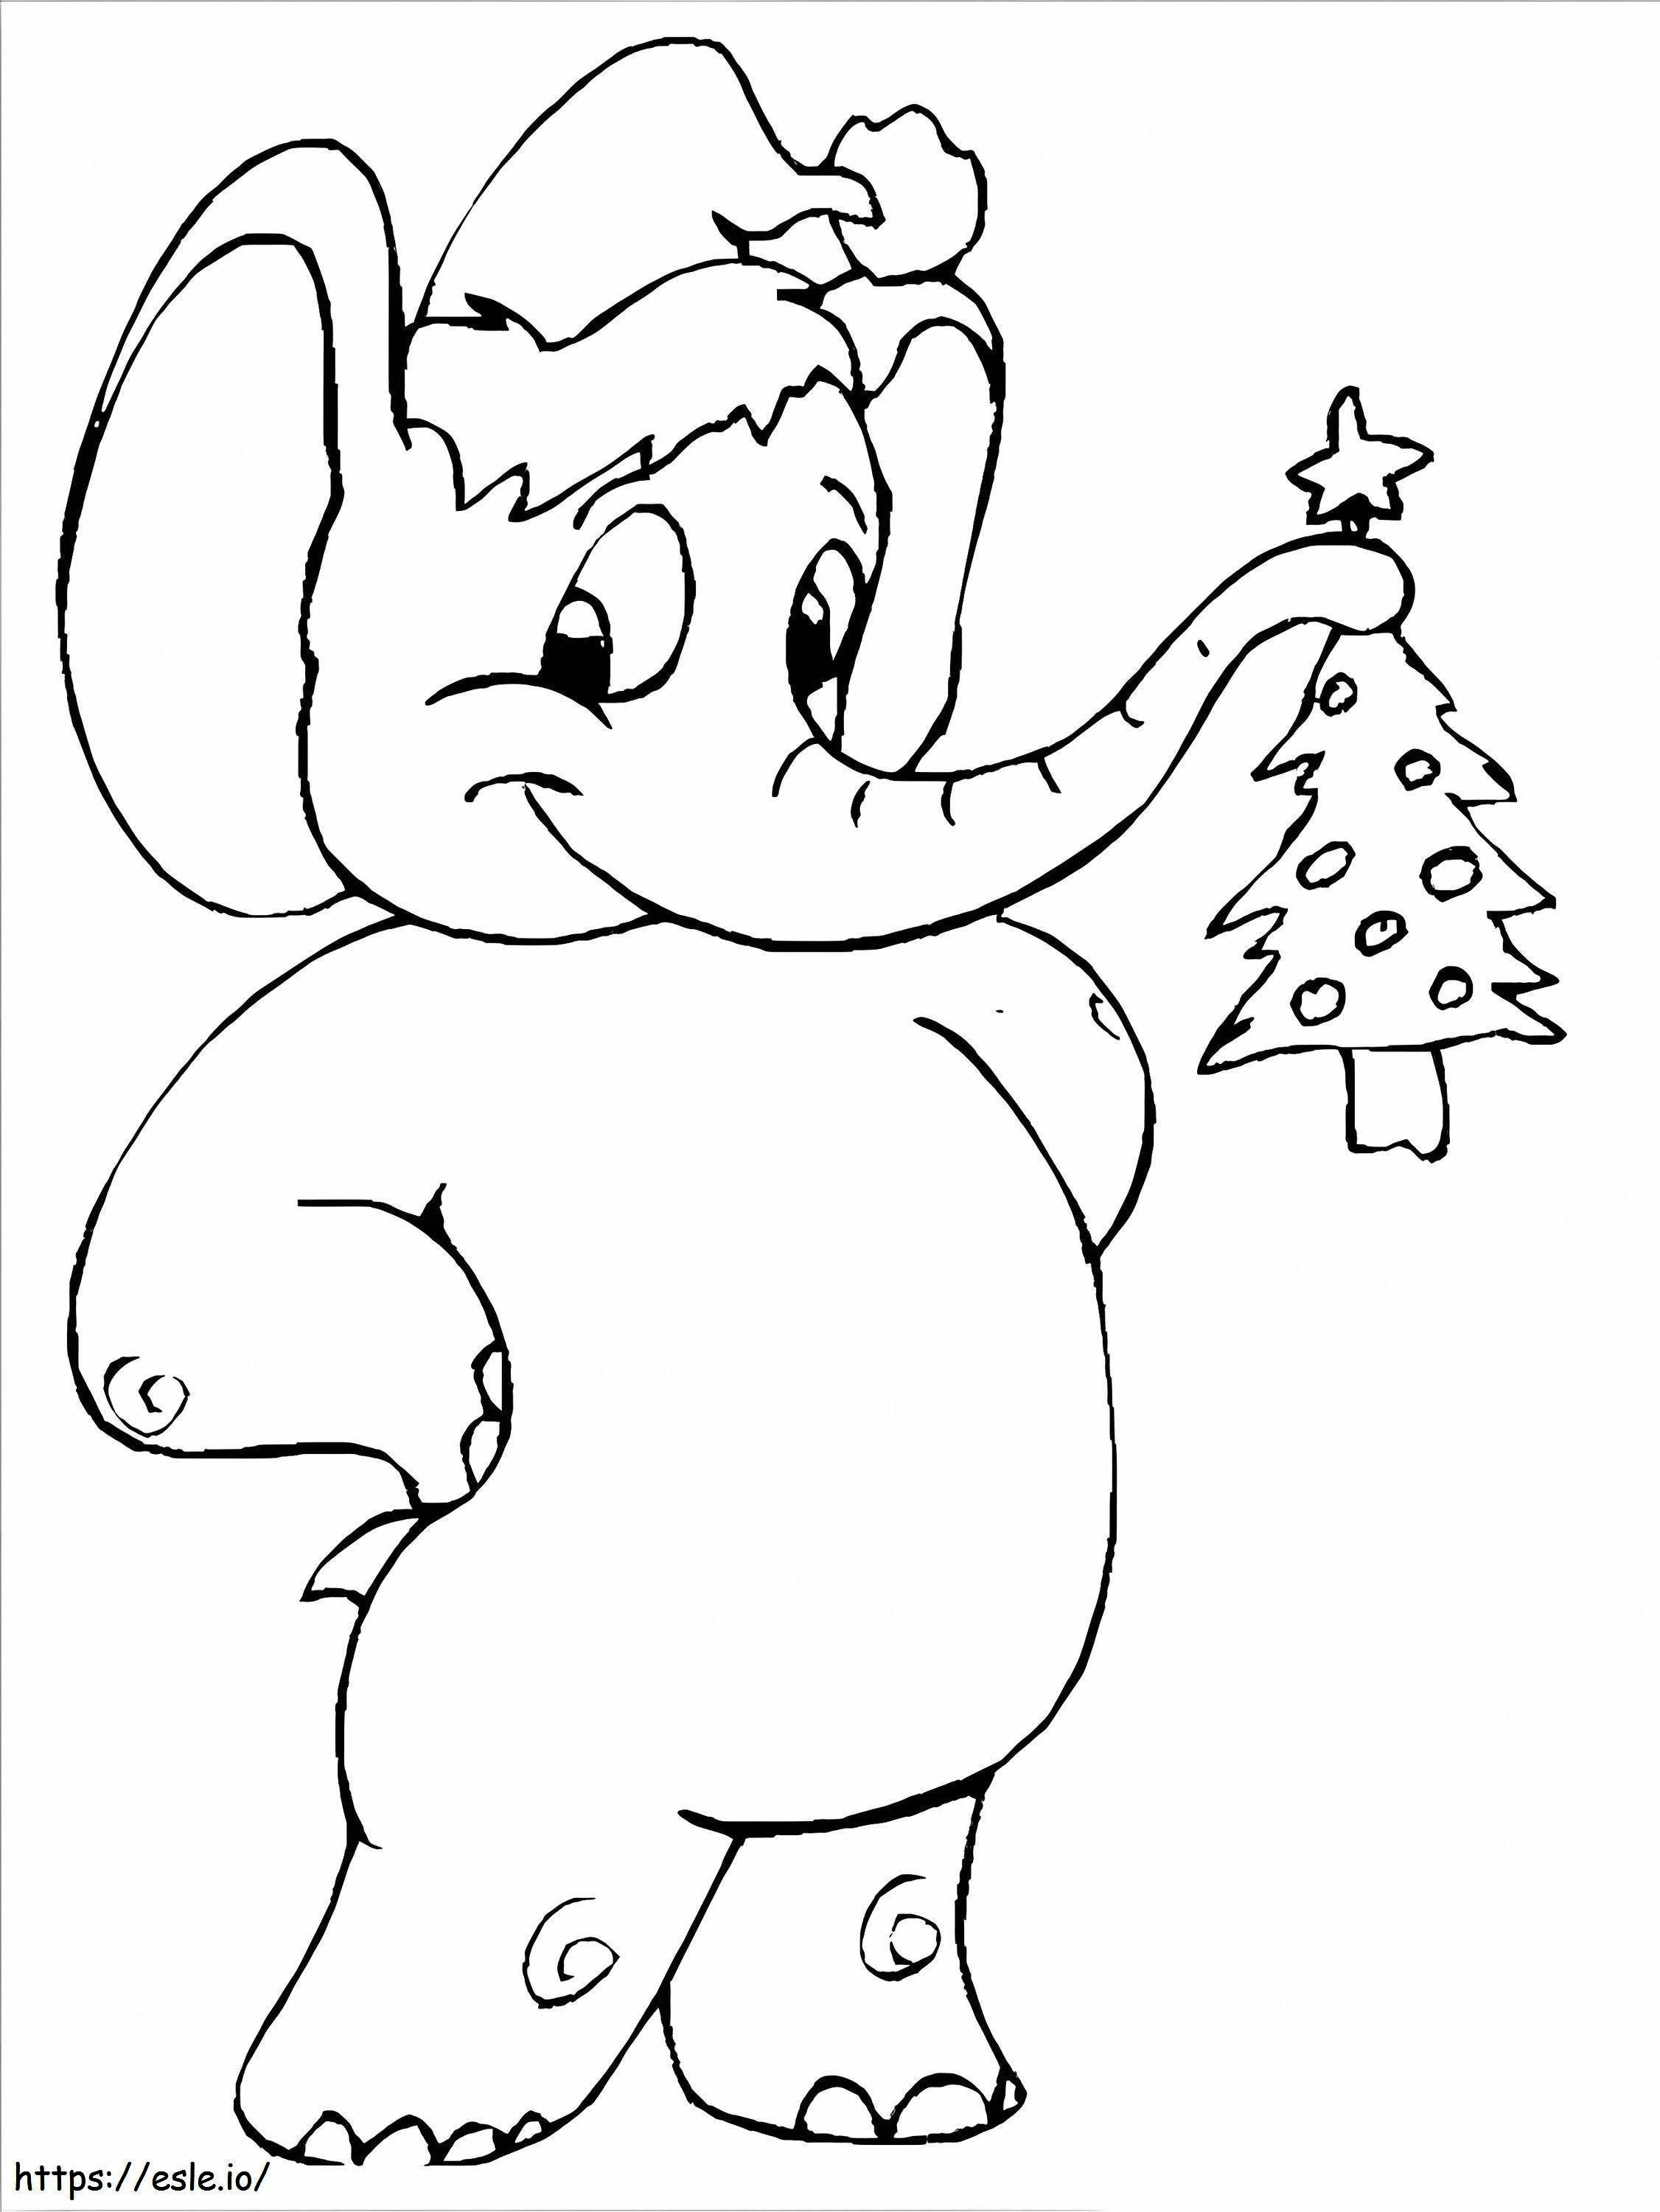 Weihnachtselefant ausmalbilder